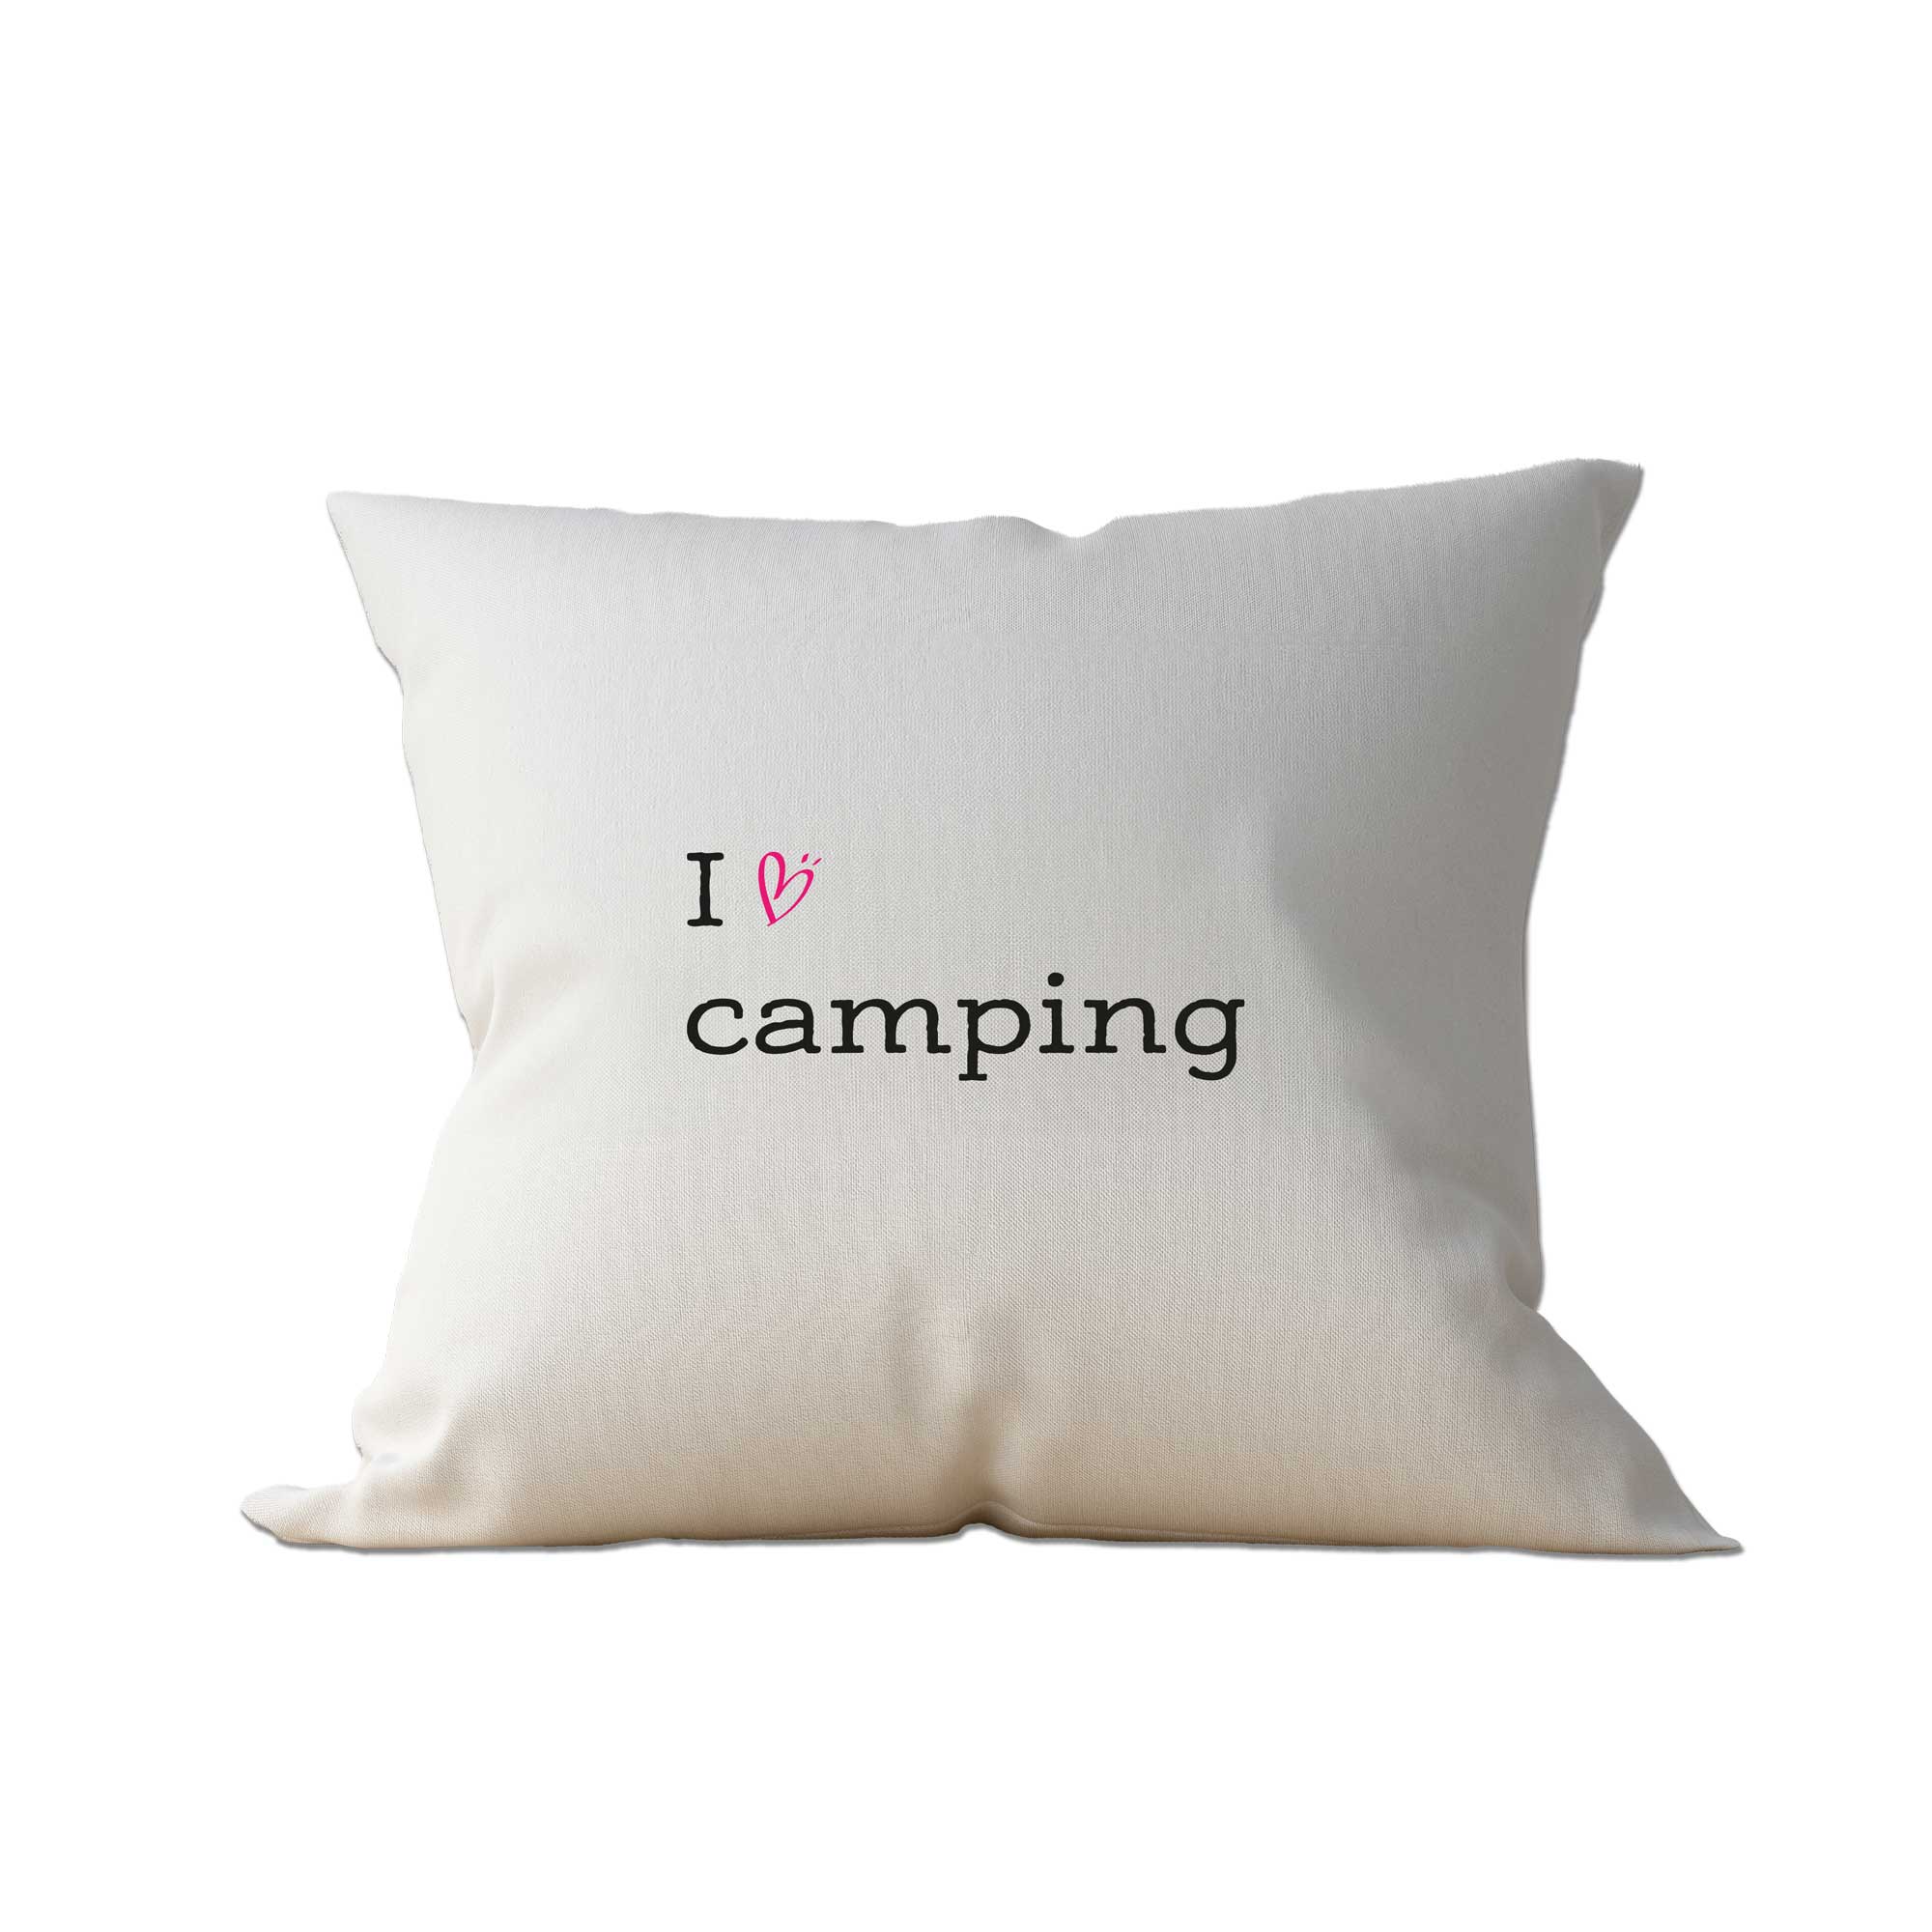 Campingkissen "I love camping"